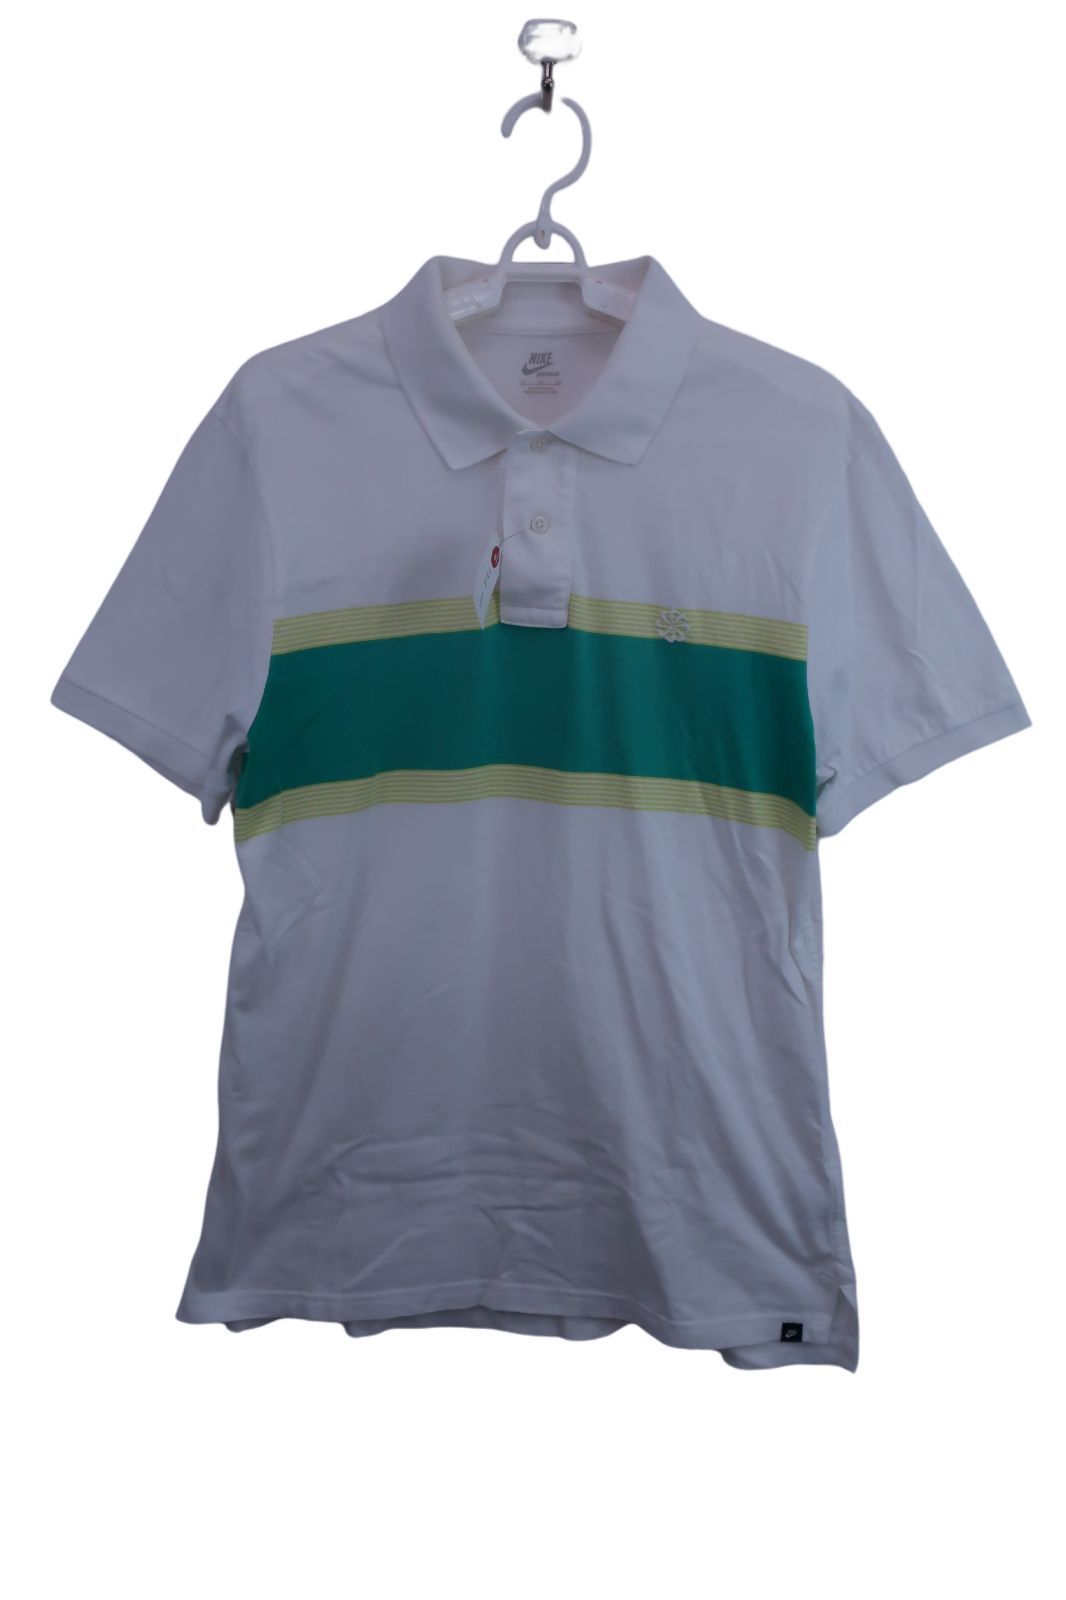 NIKE GOLF(ナイキゴルフ) ポロシャツ 白緑 メンズ XL ゴルフウェア 2309-0031 中古 - メルカリ